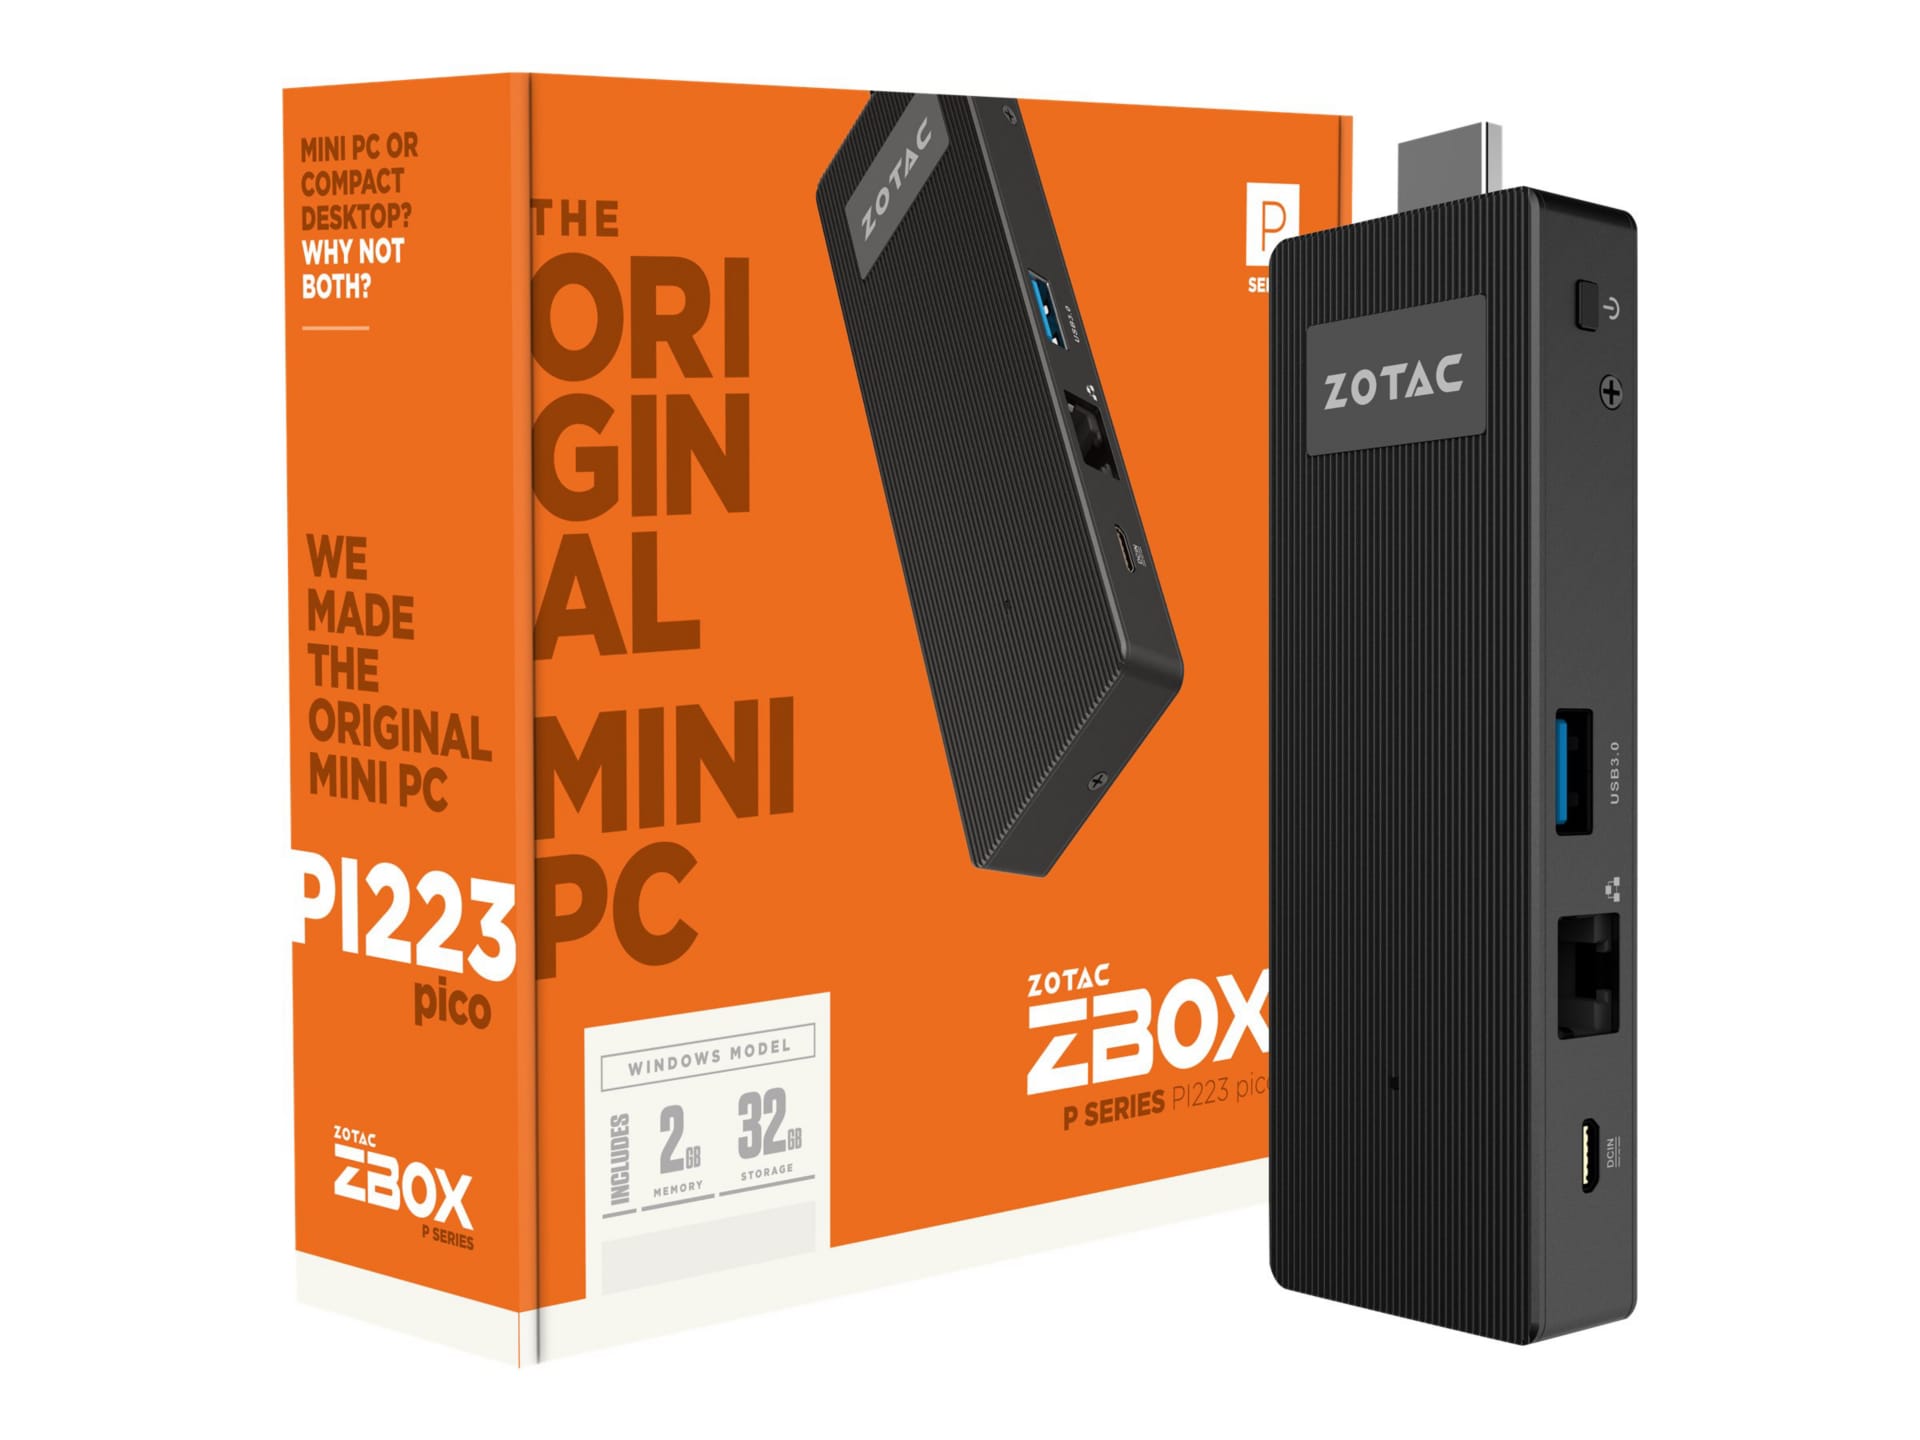 ZOTAC ZBOX P Series PI223 pico - mini PC - Atom x5 Z8350 1.44 GHz - 2 GB -